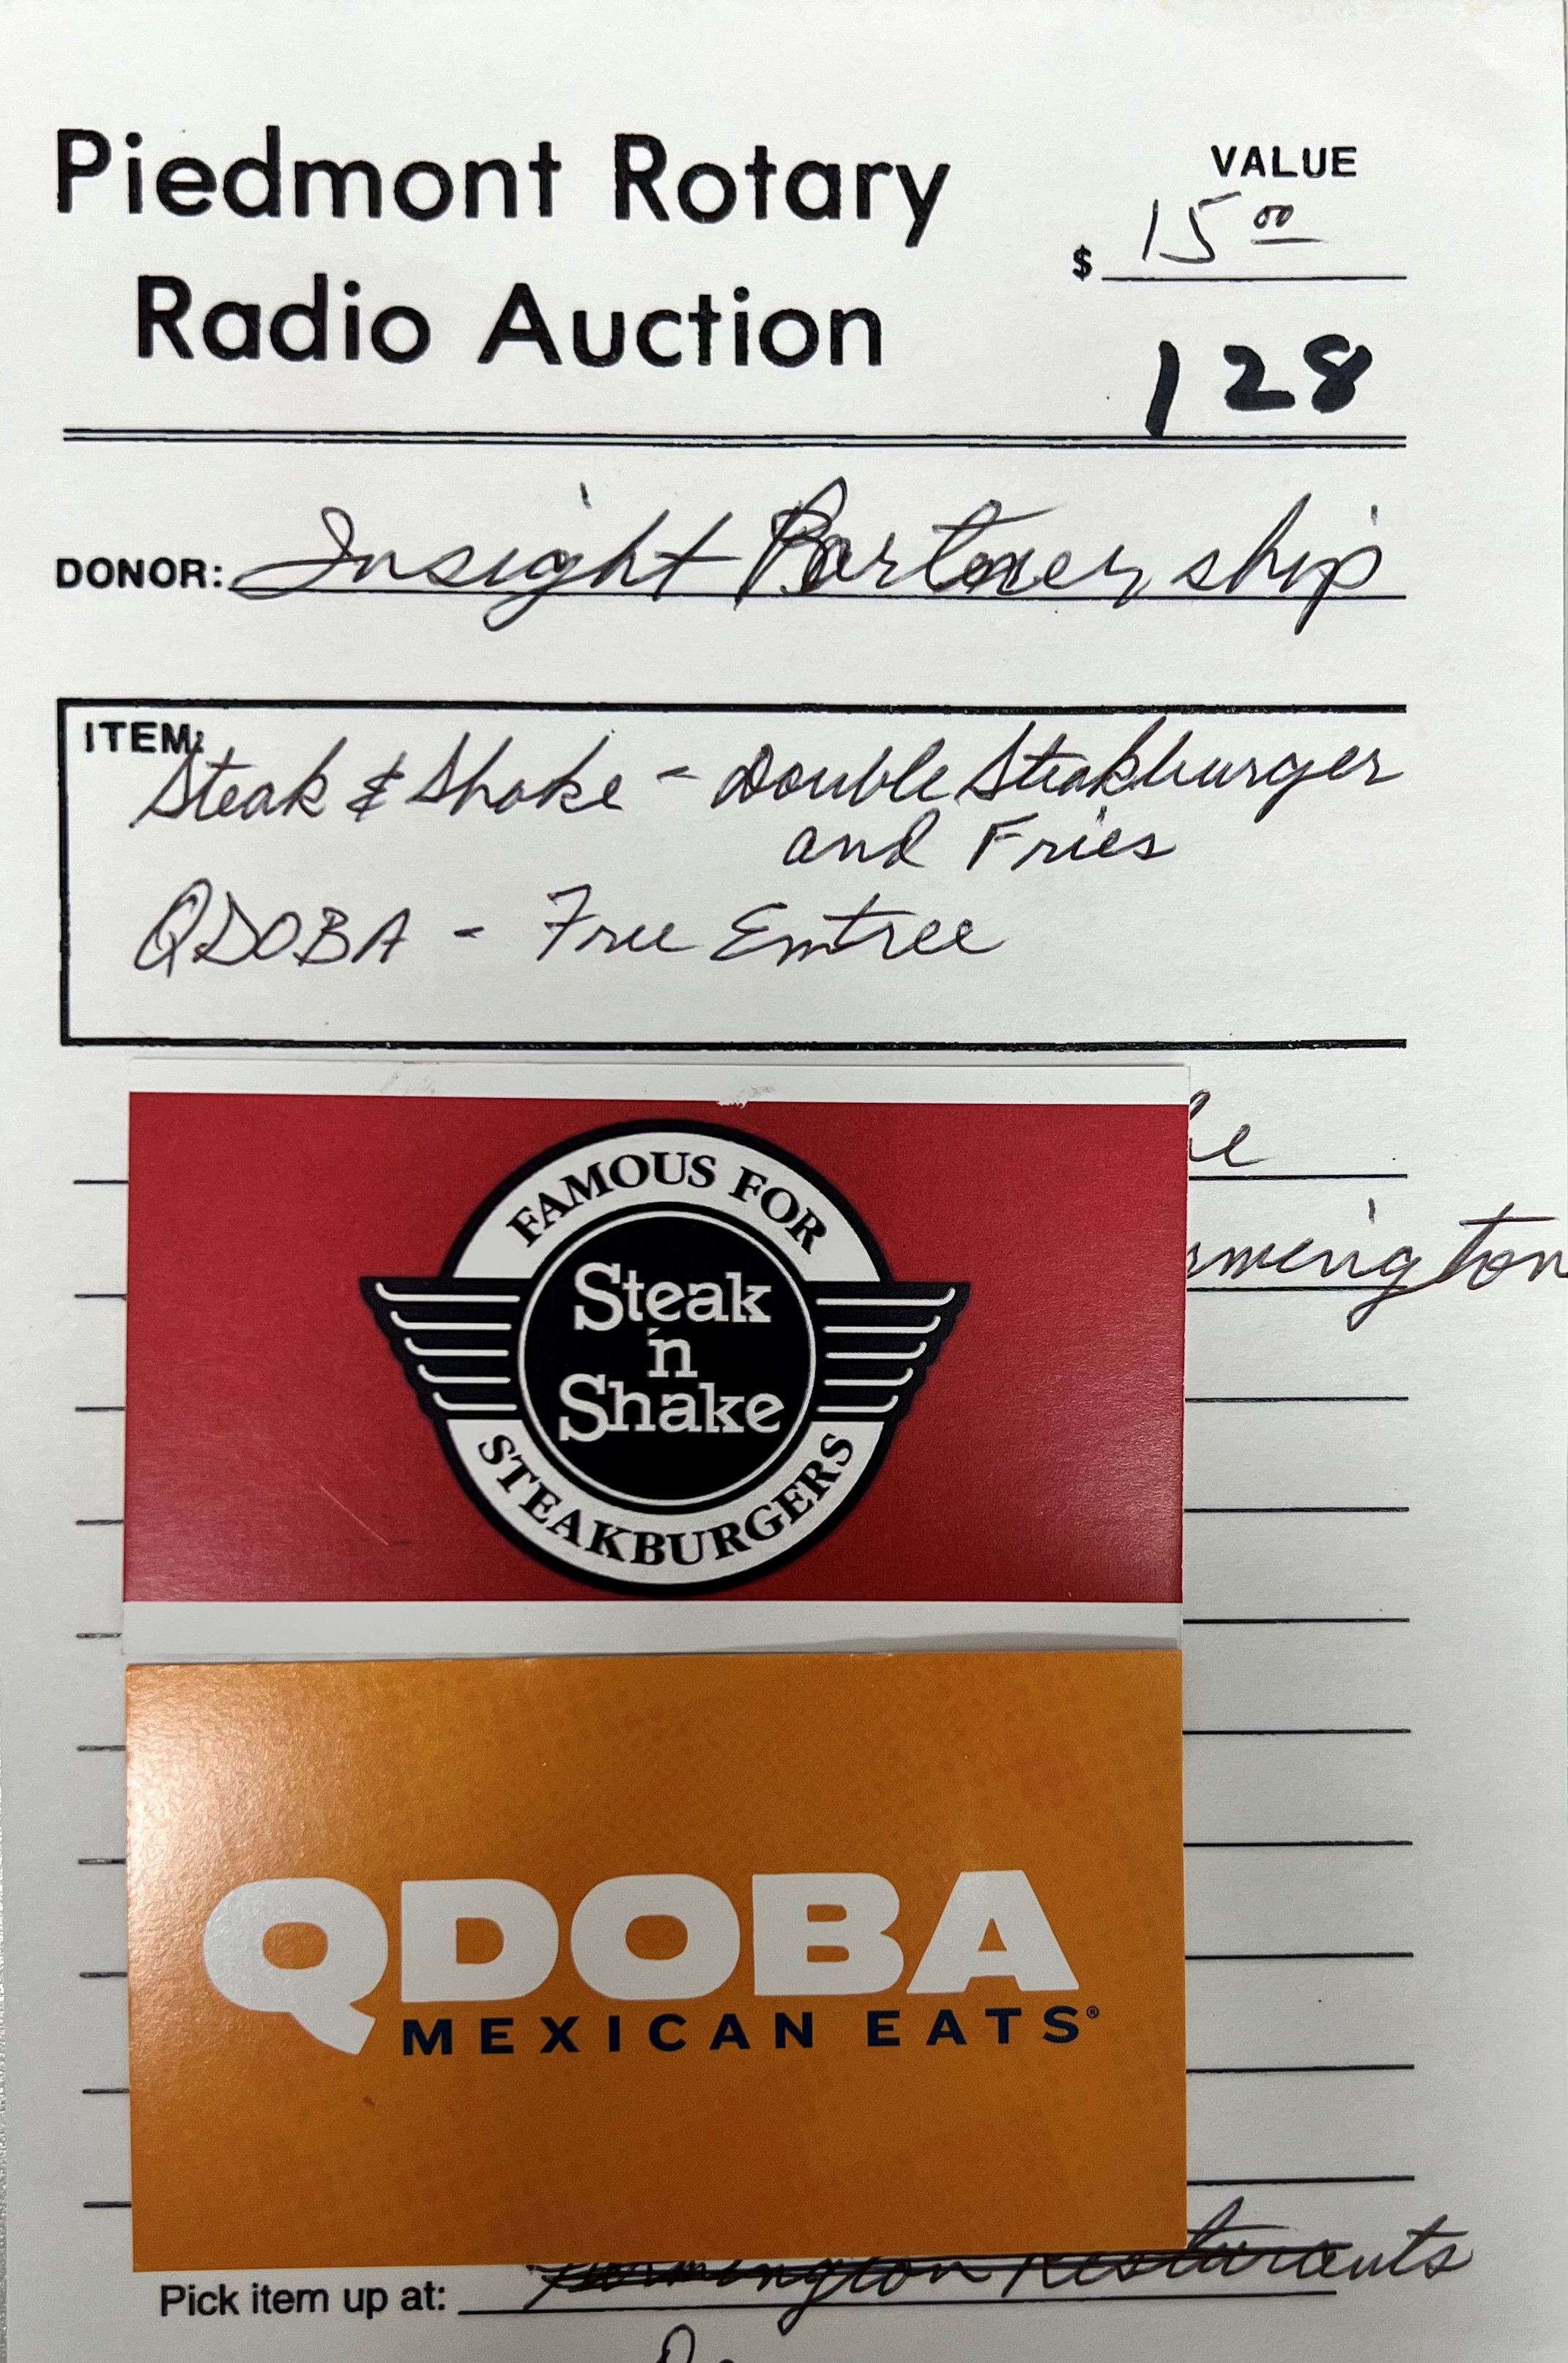 Steak & Shake/Qdoba Gift Certificates